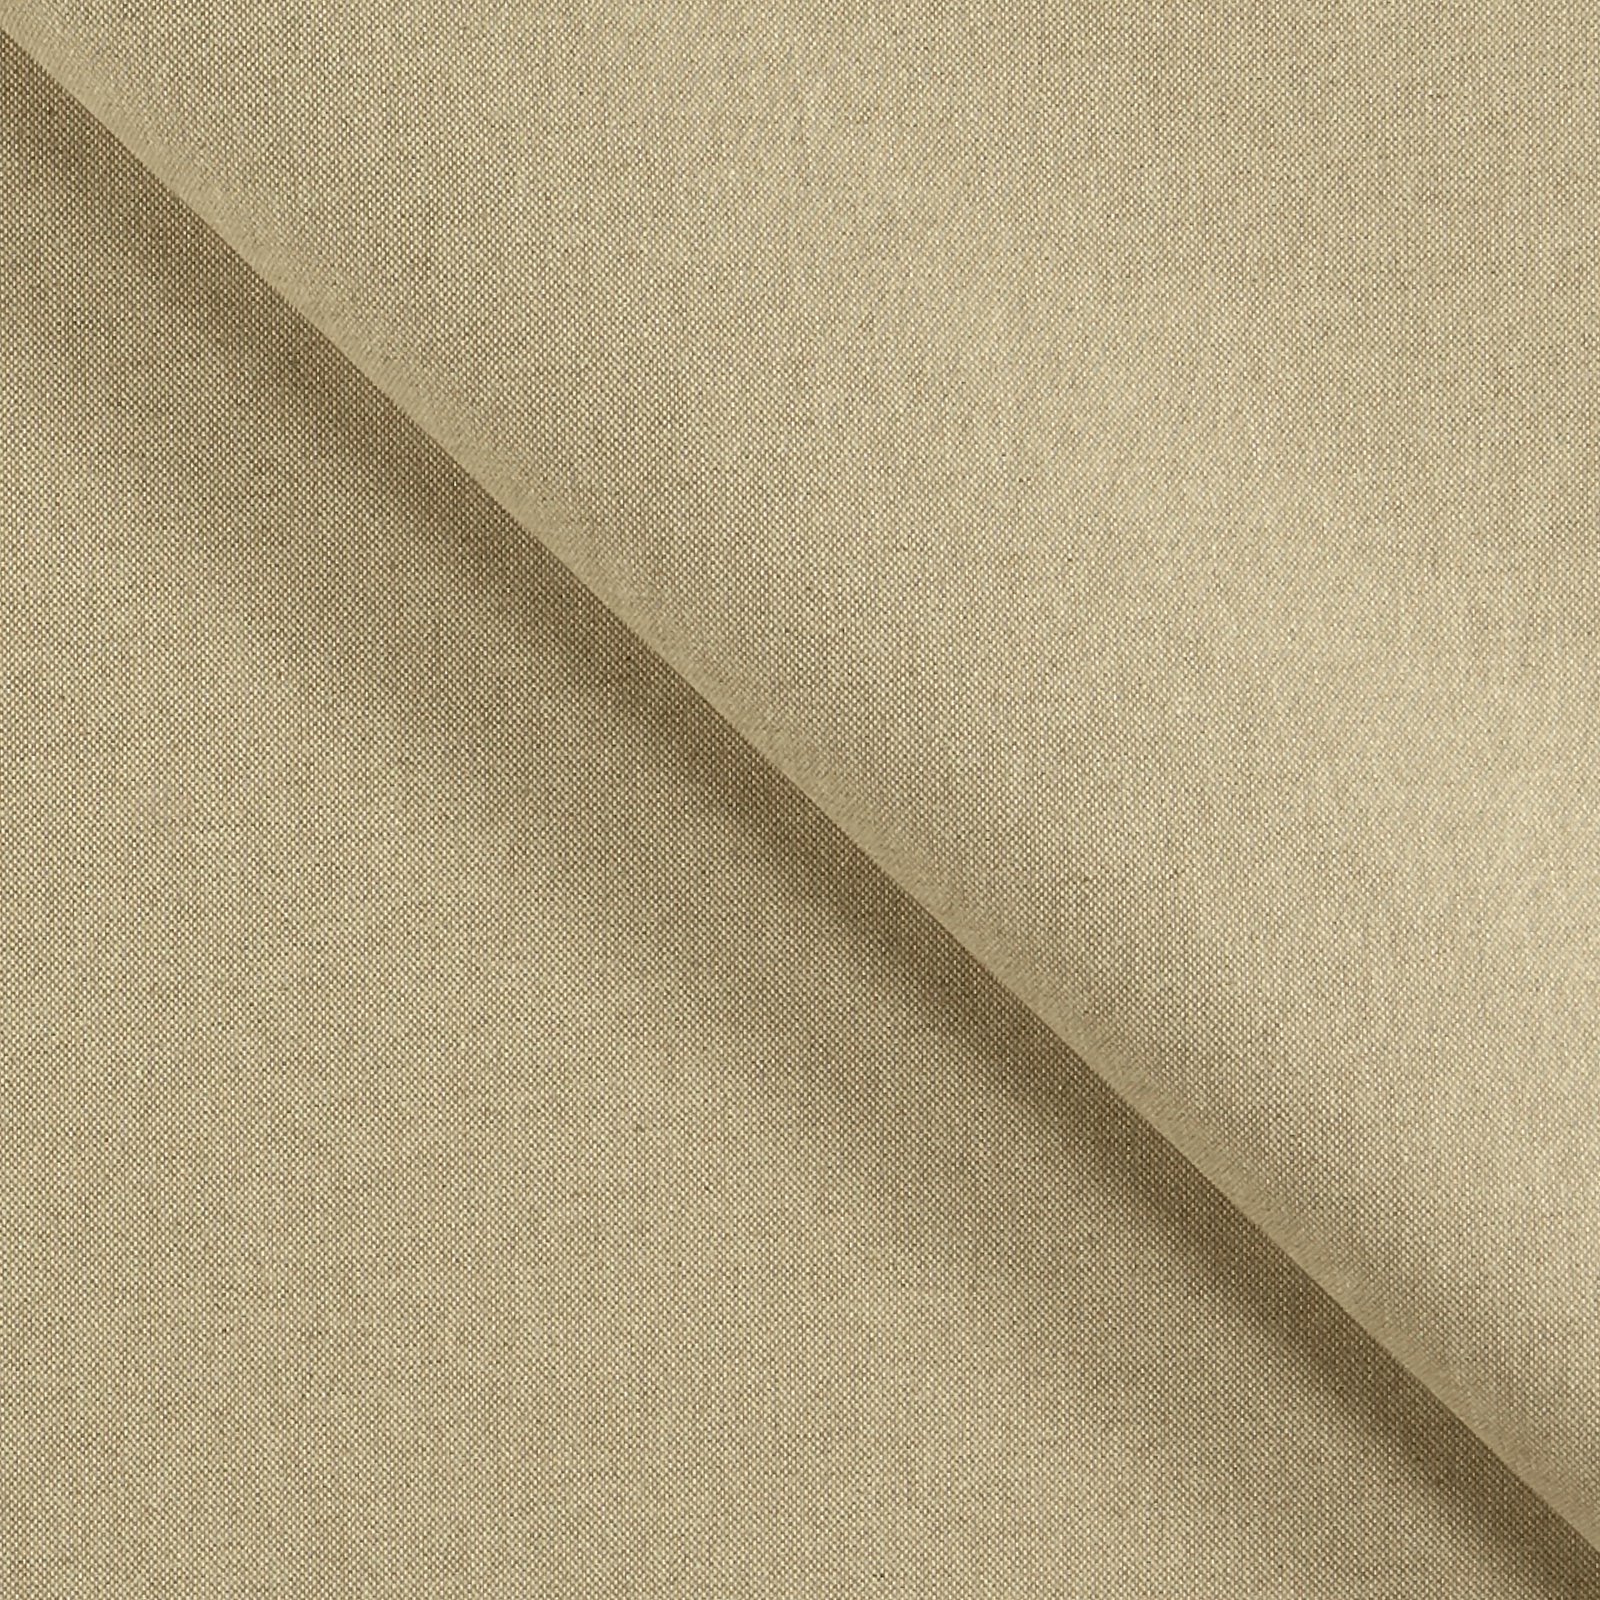 Tekstilvoksdug hørlook  158-160 cm bred 870211_pack